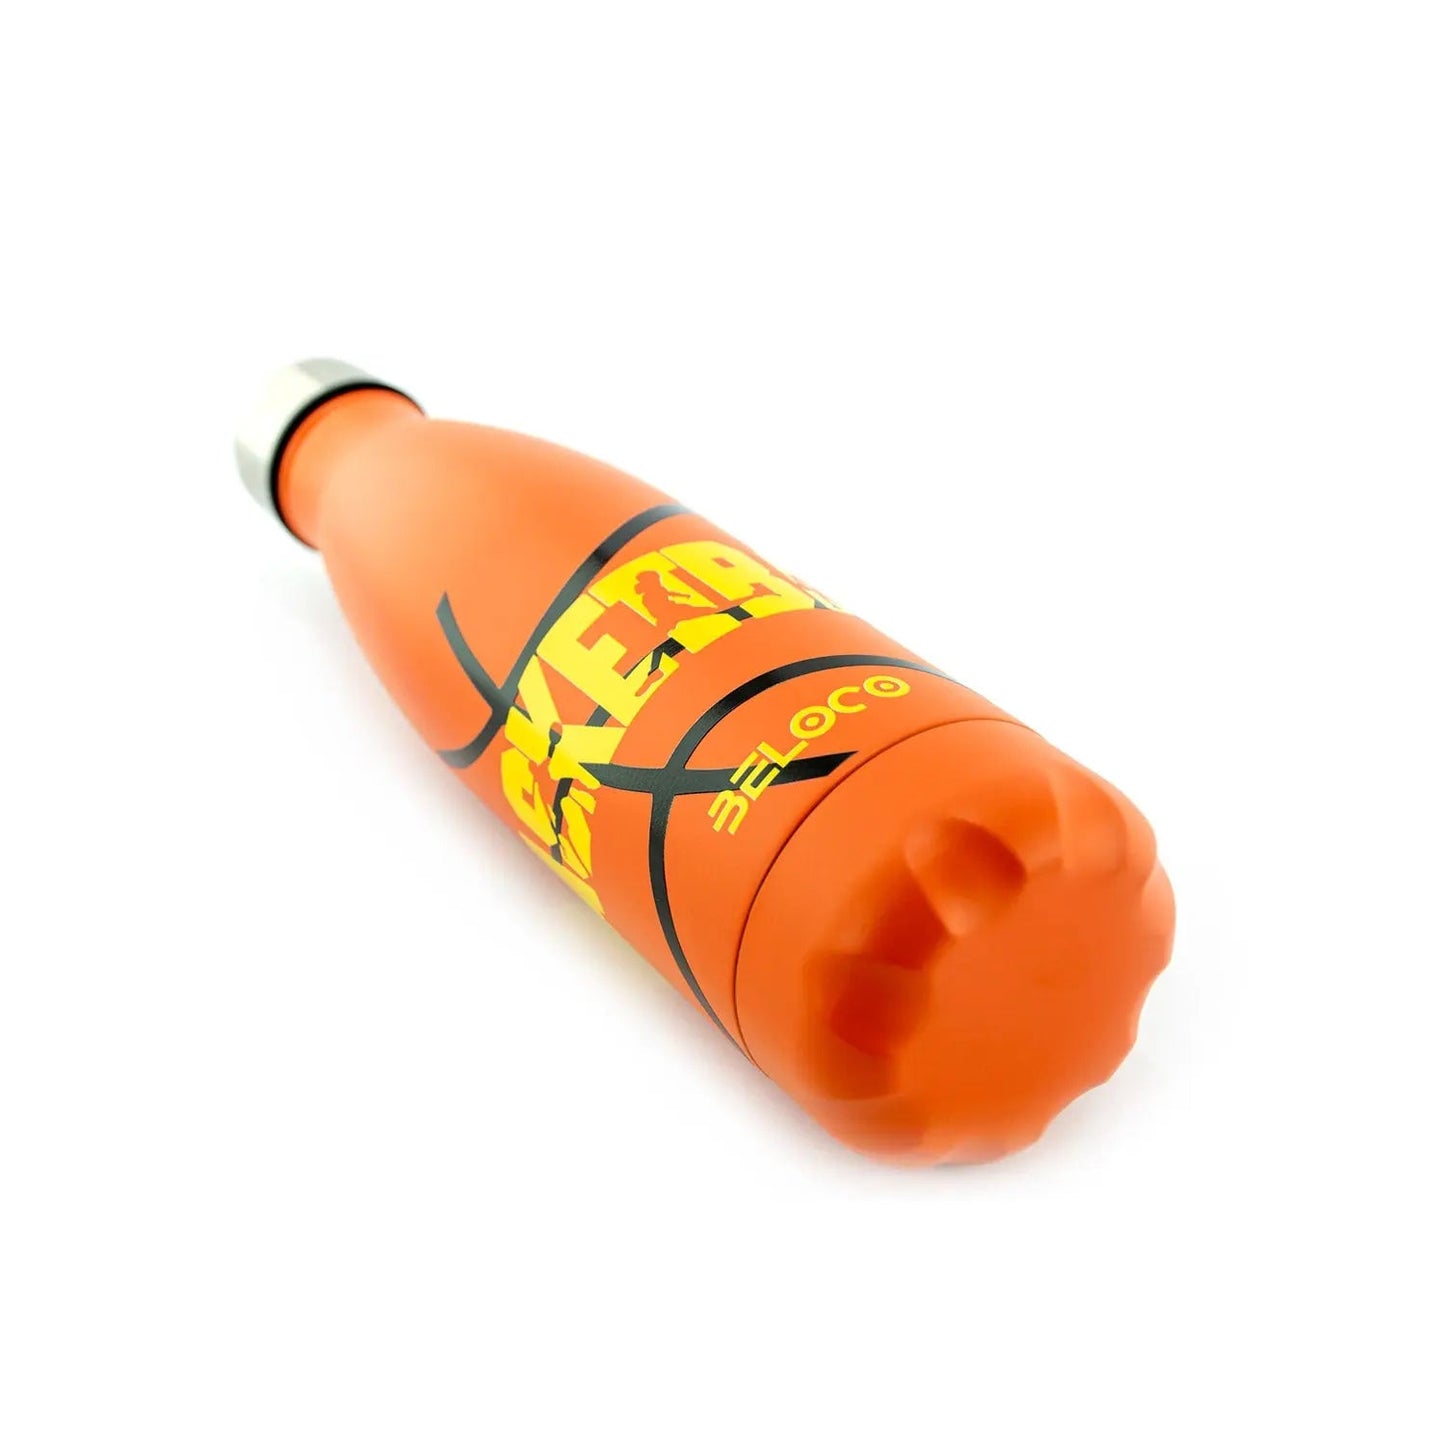 Basketball bottle - 500 ml - BeLoco